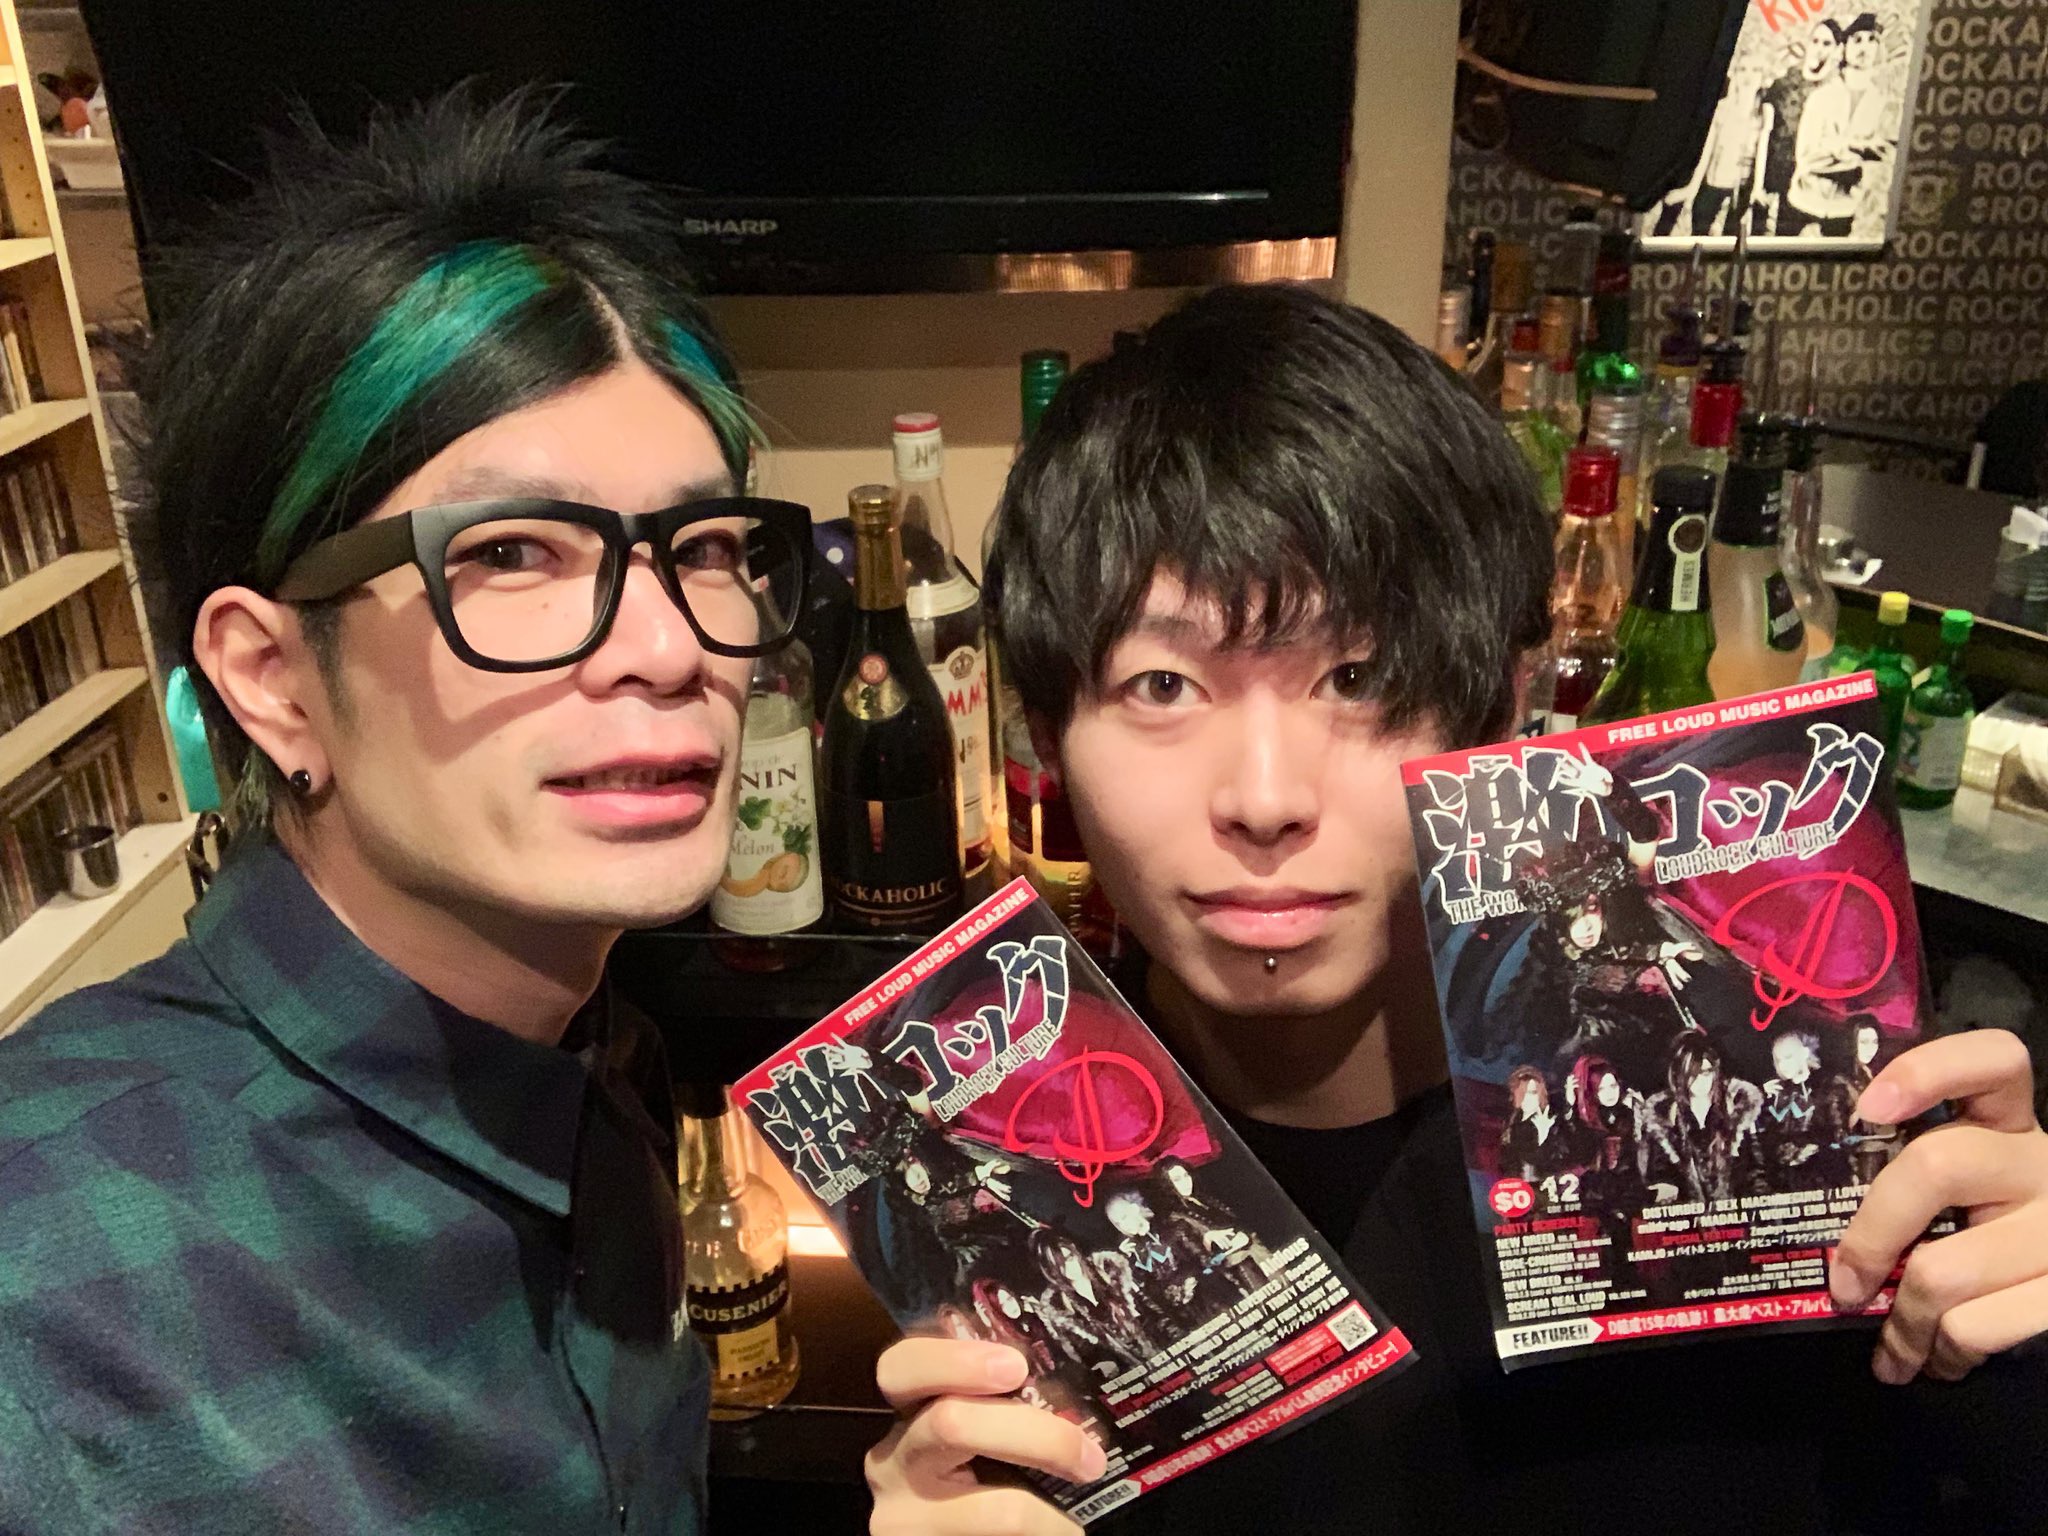 https://bar-rockaholic.jp/shibuya/blog/93318A06-7013-43C3-969D-13C9AAA3089F.jpeg